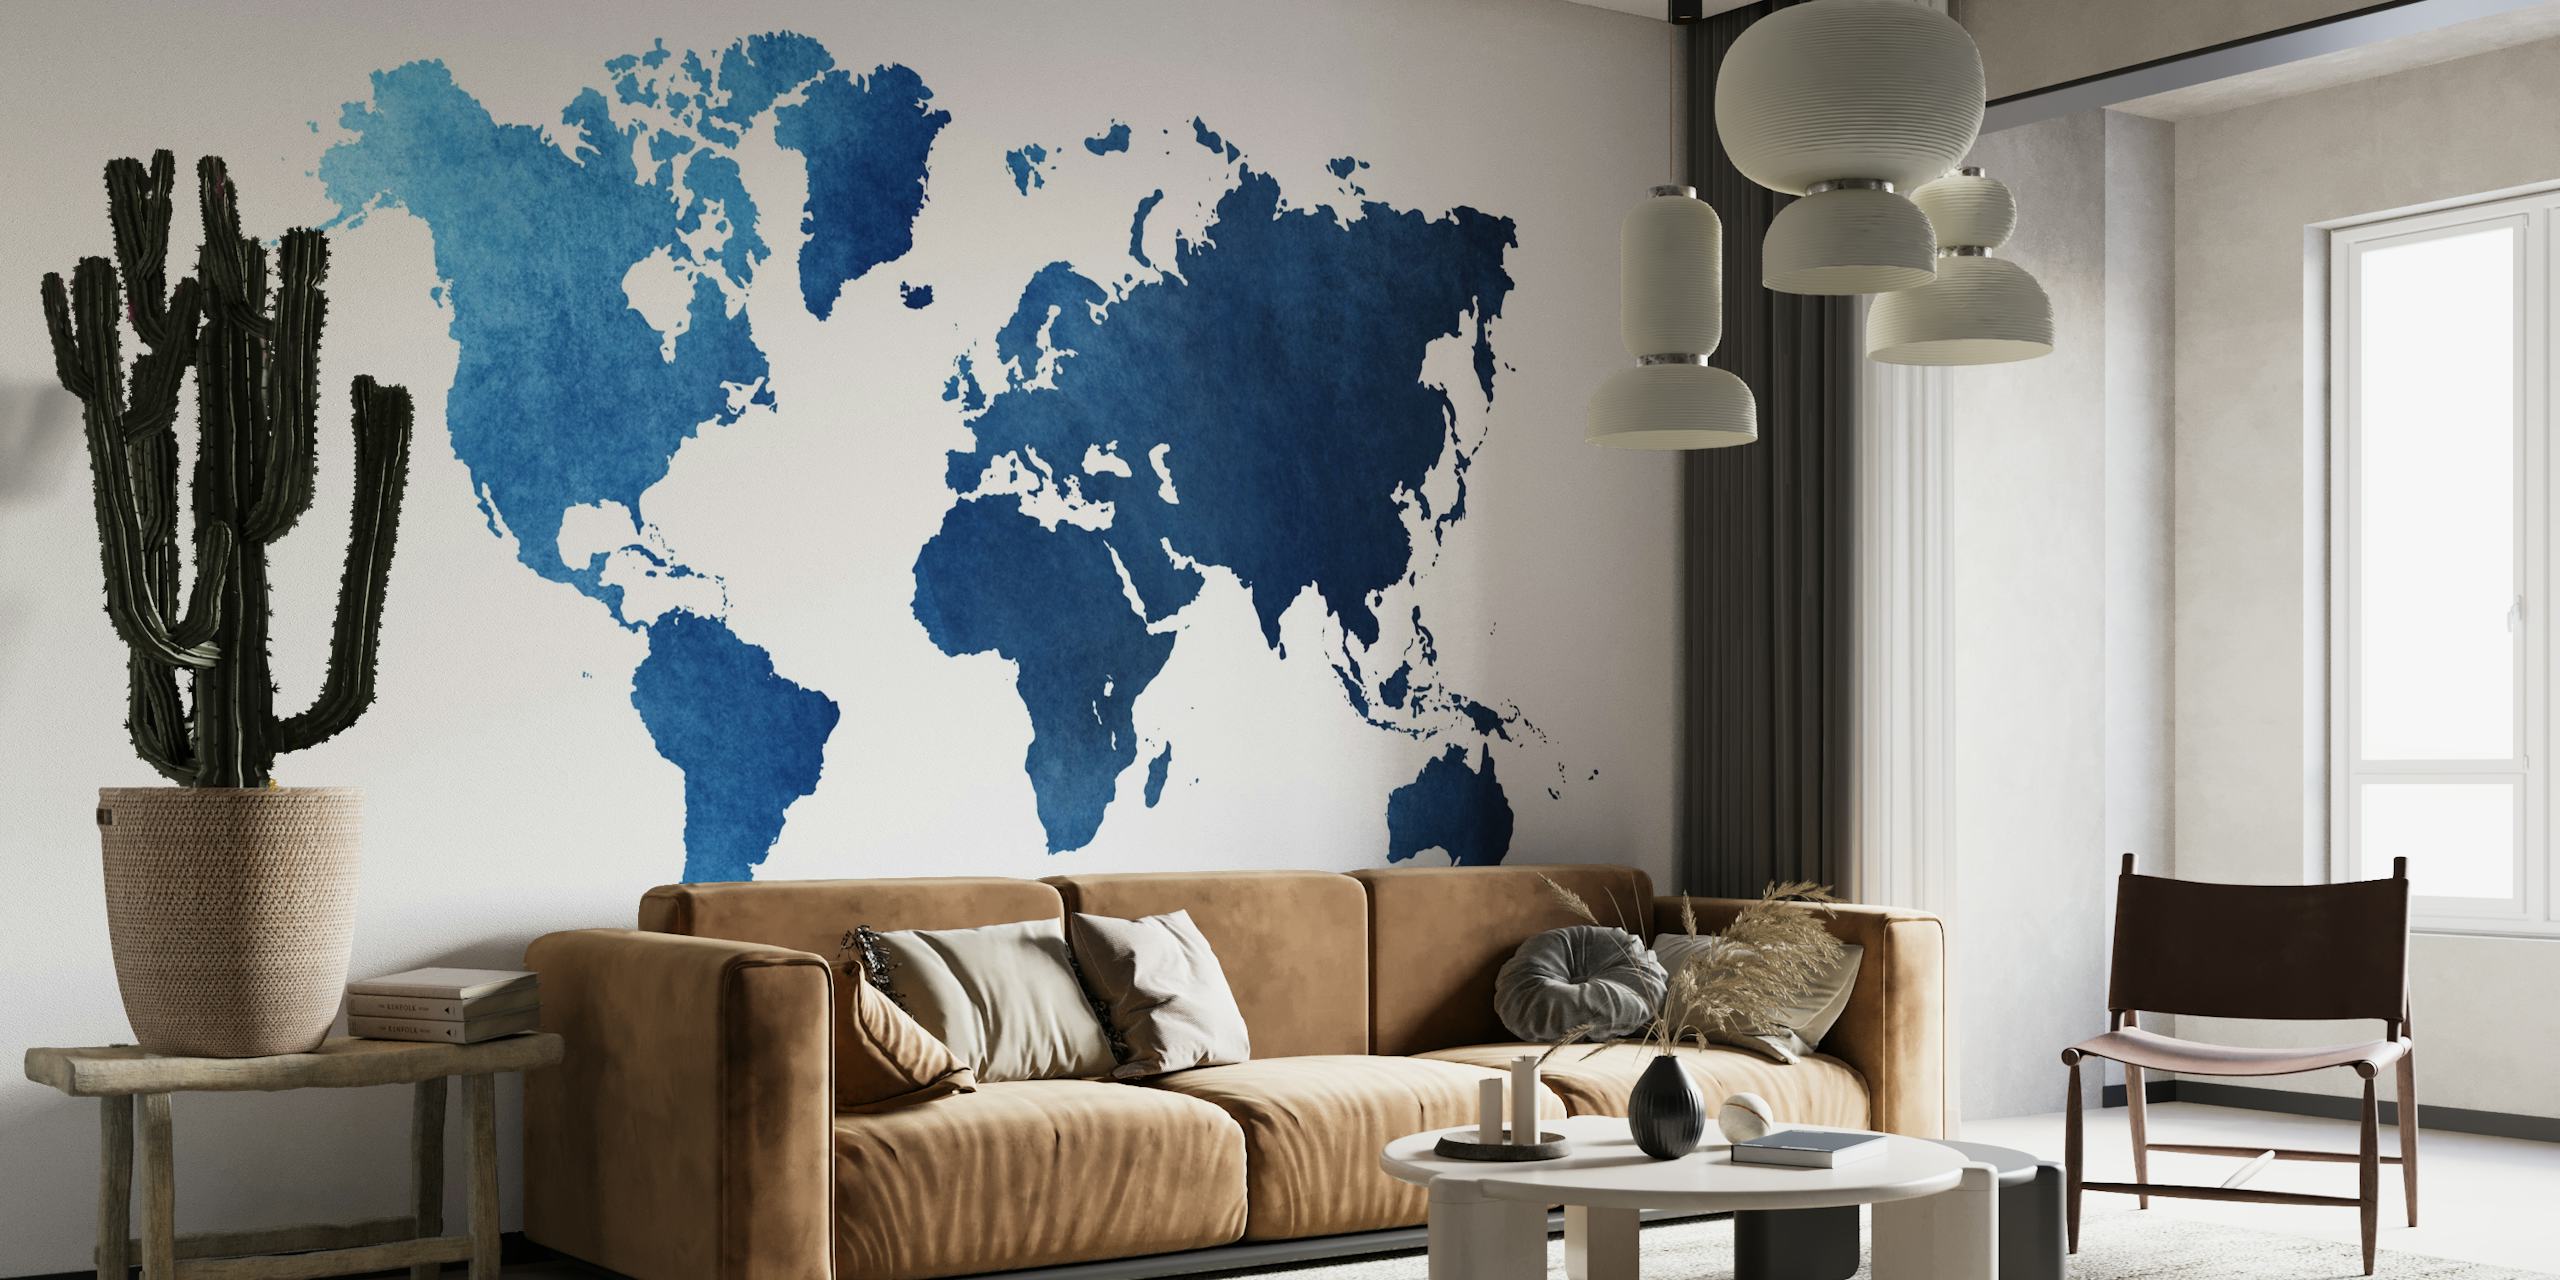 World Map Navy and Blue papel pintado